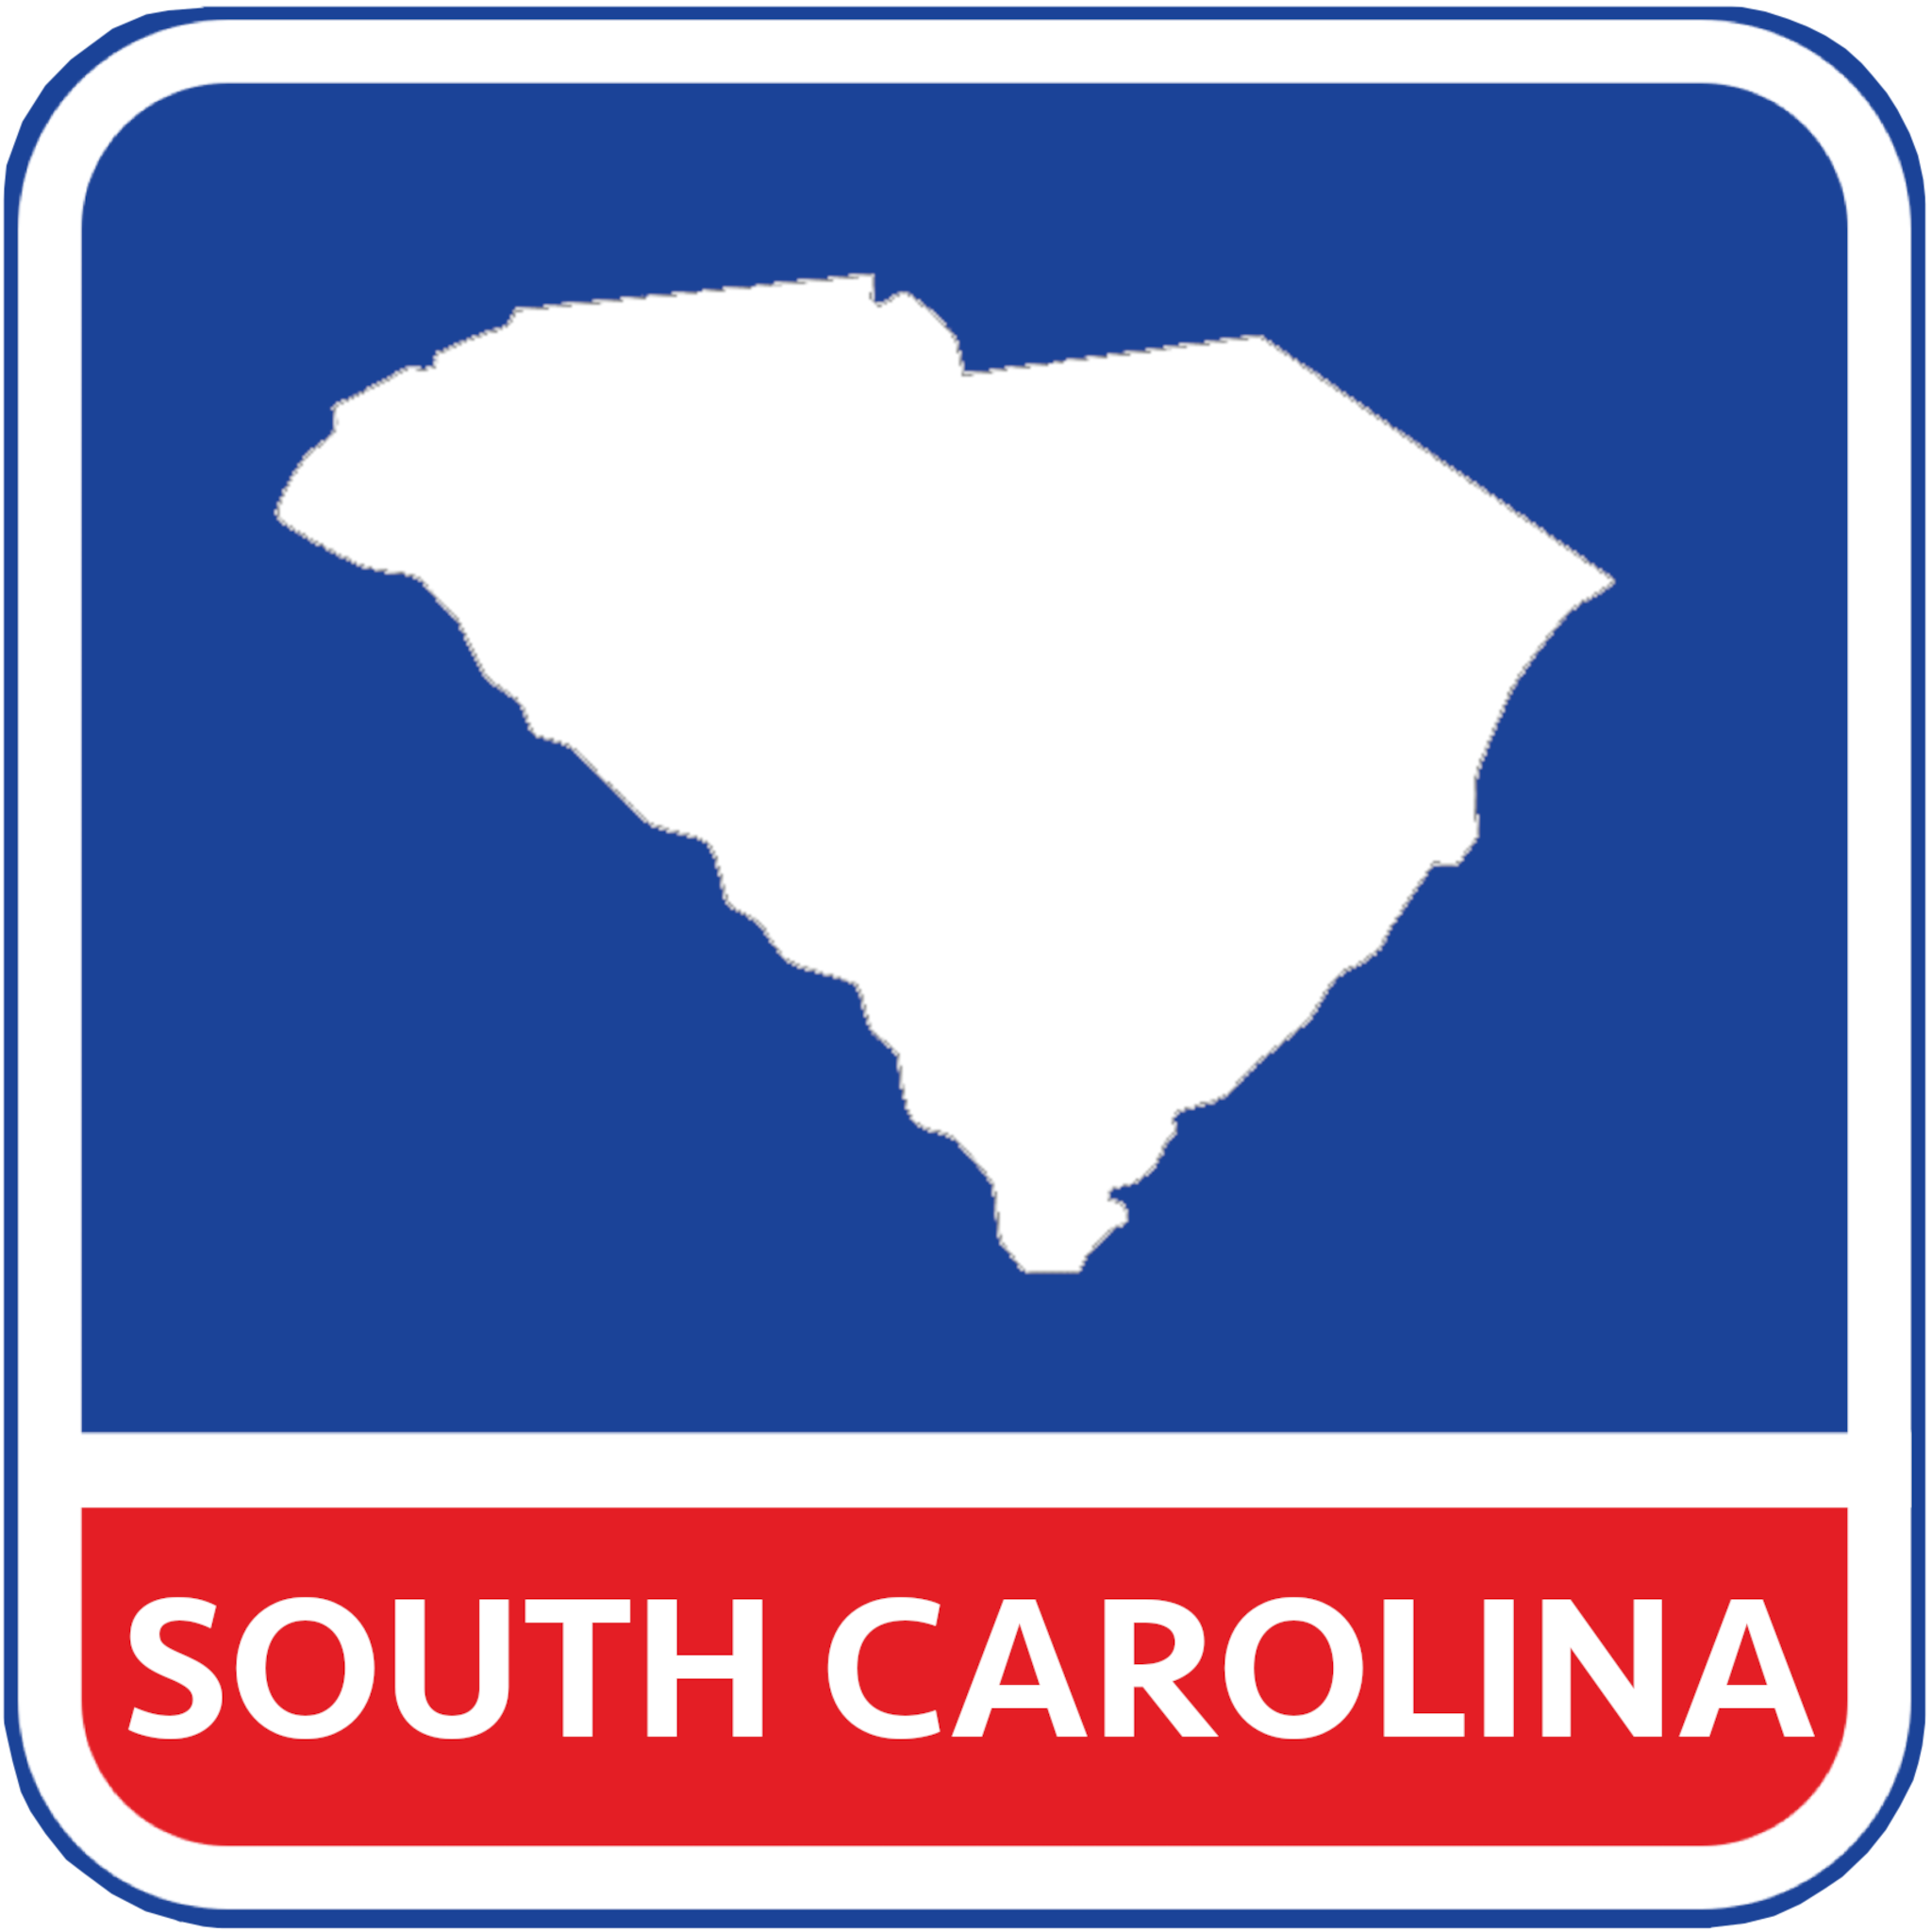 south carolina logo